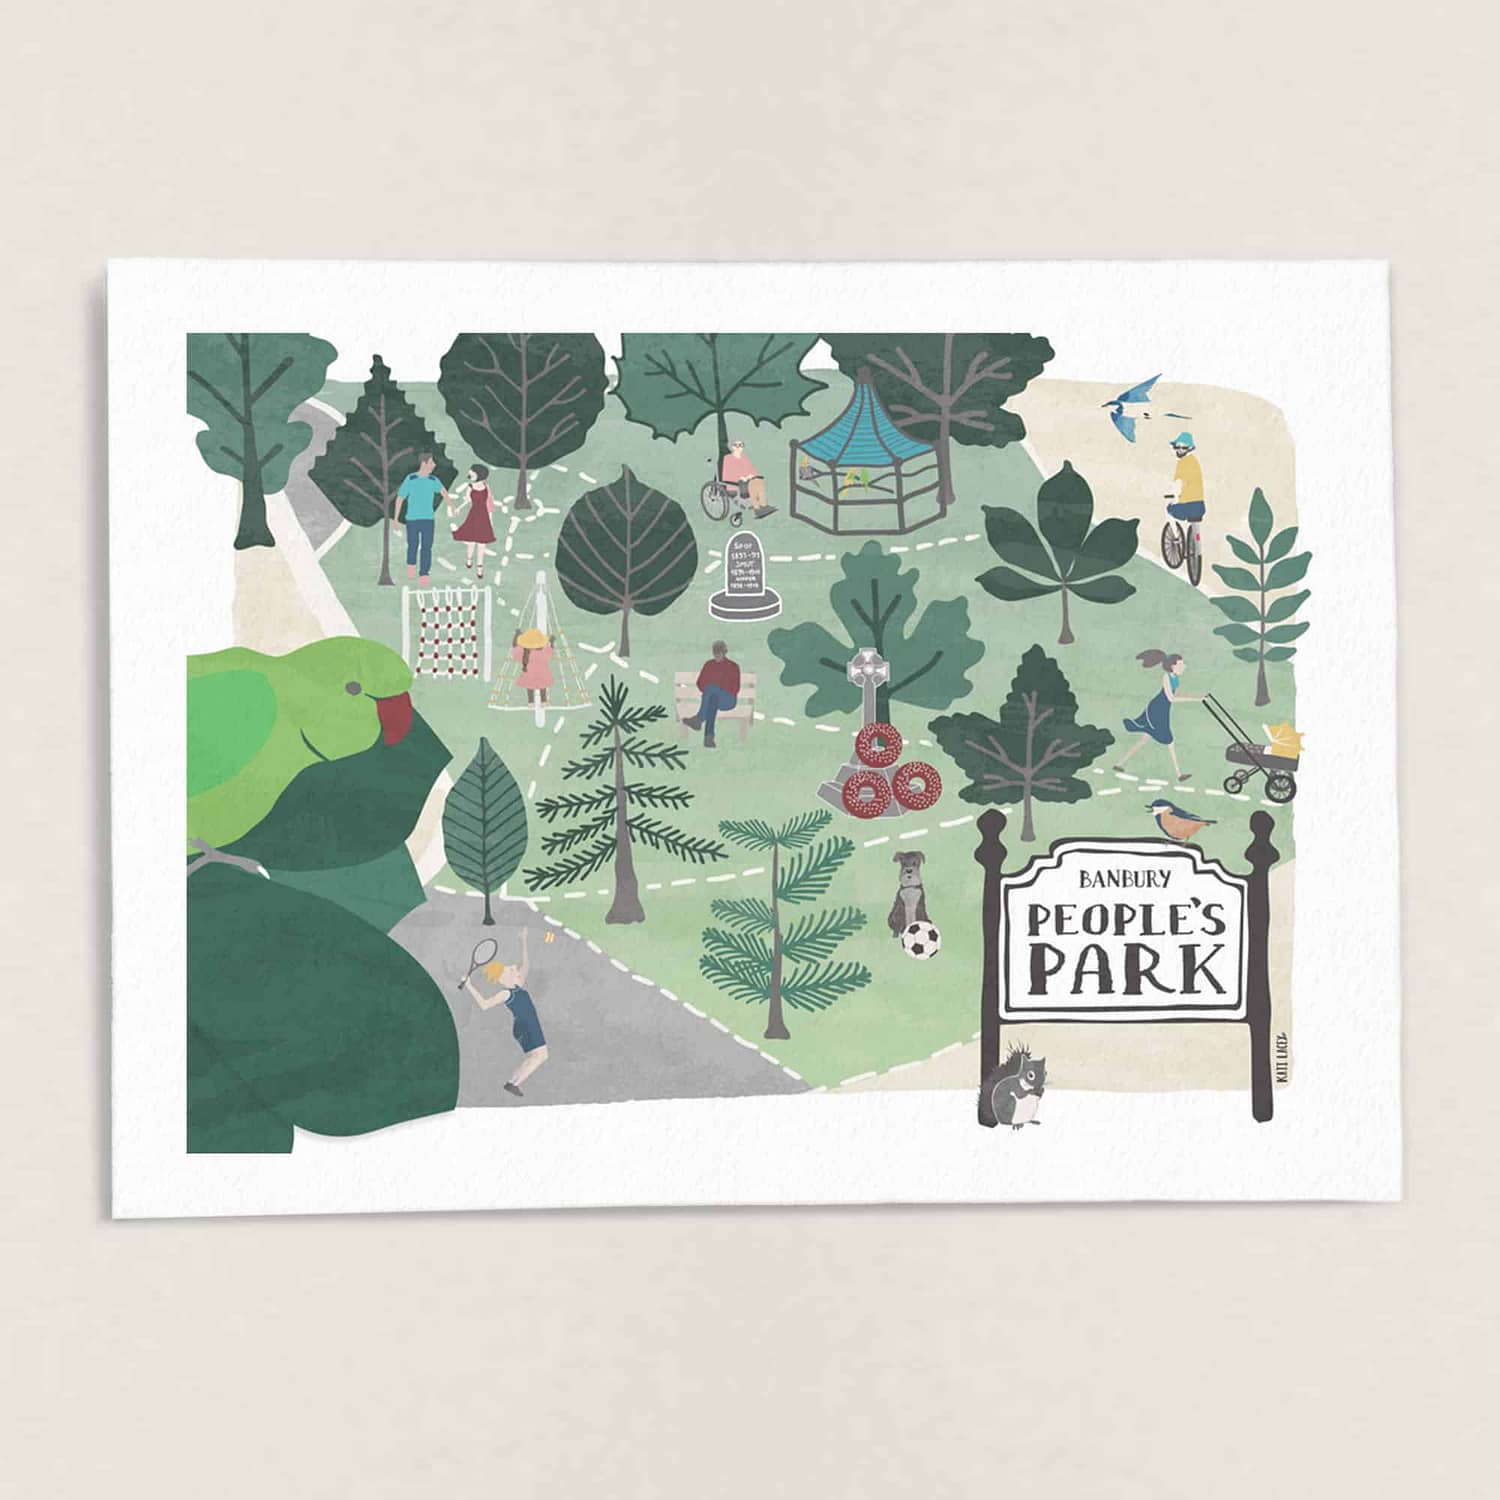 Banbury-People's-Park-Wall-Art-Print-Illustration-by-Kati-Lacey-Illustration